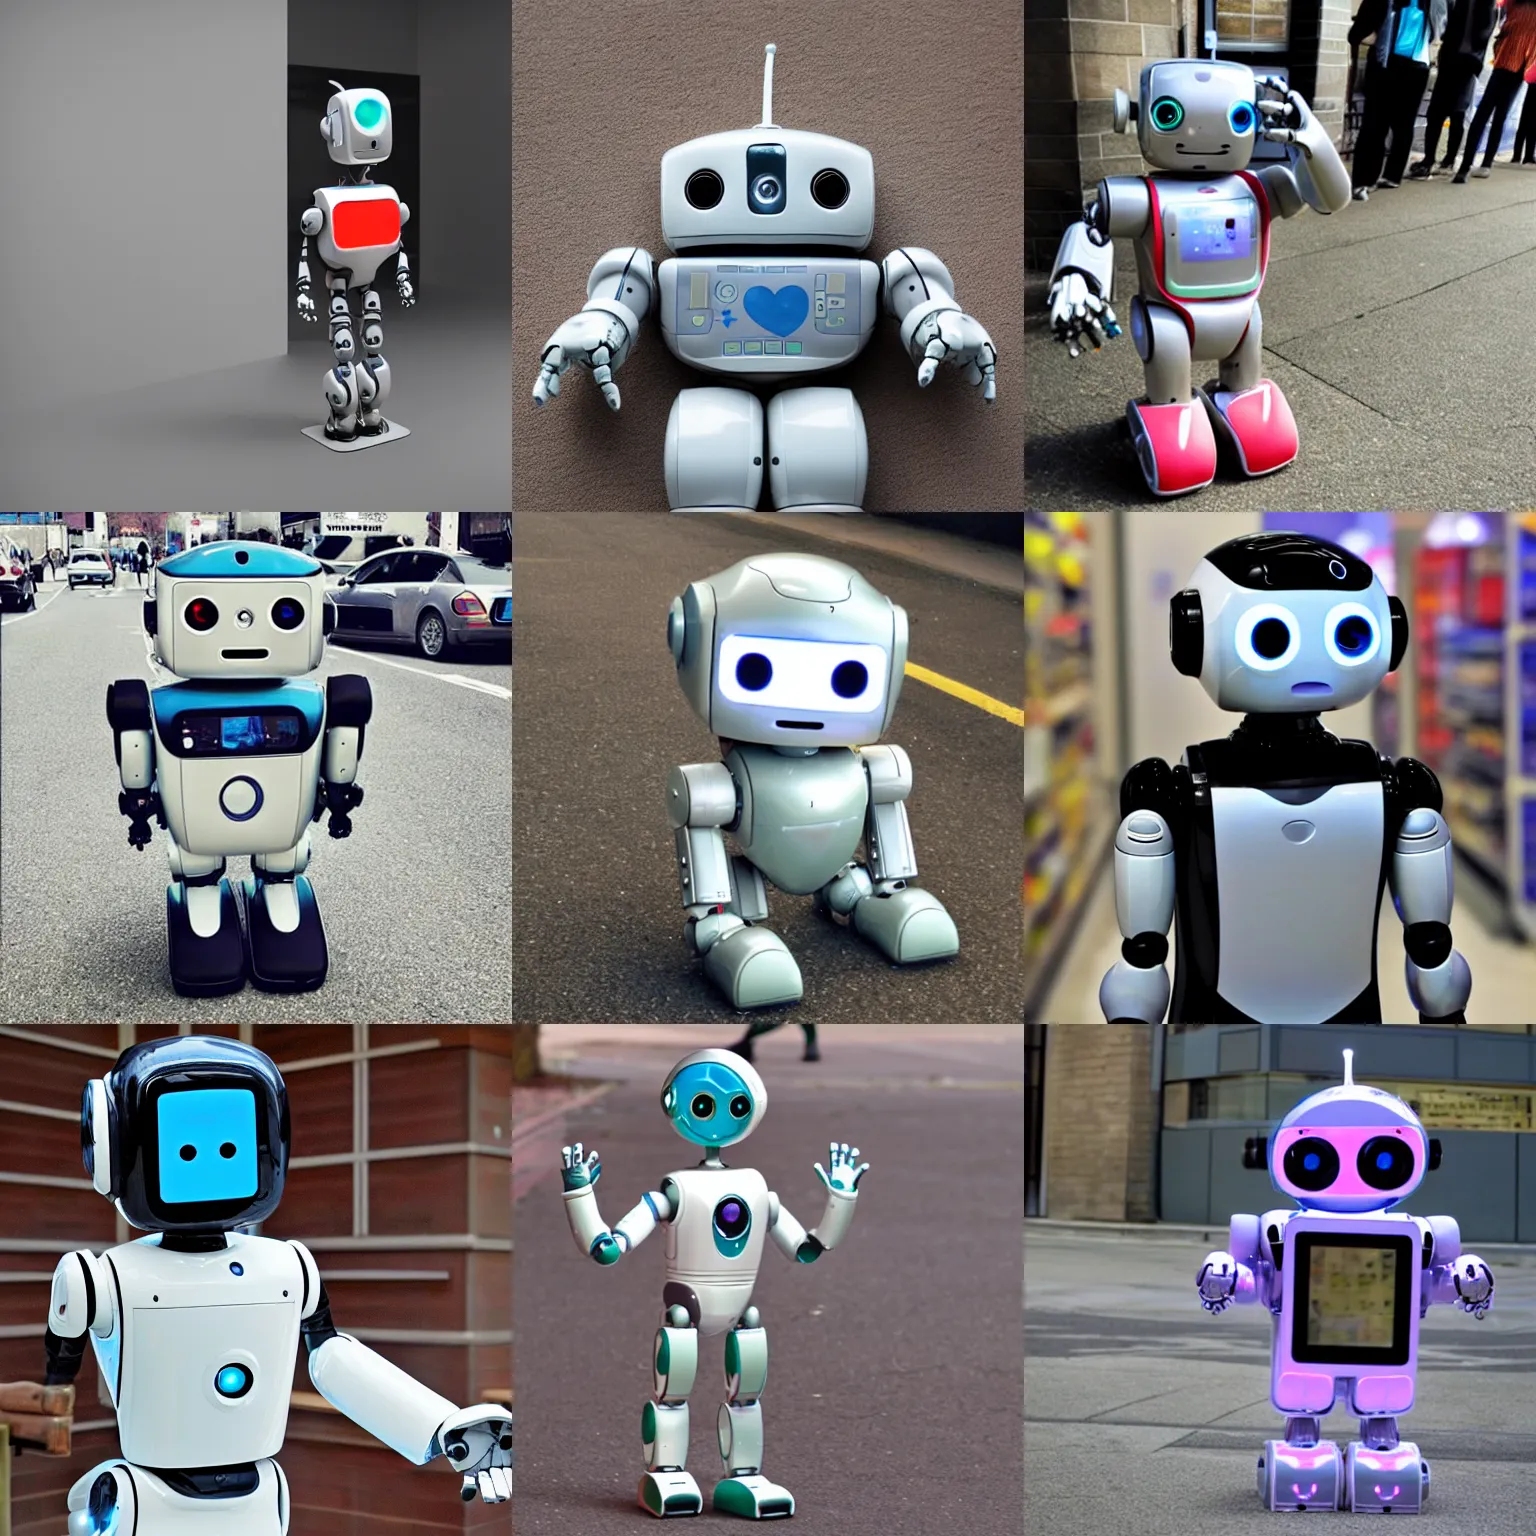 Prompt: <photograph robot='friendly adorable' robot-origin='futuristic self-aware sentient robot store'>Cute Robot Wants You To Pick It Up</photograph>